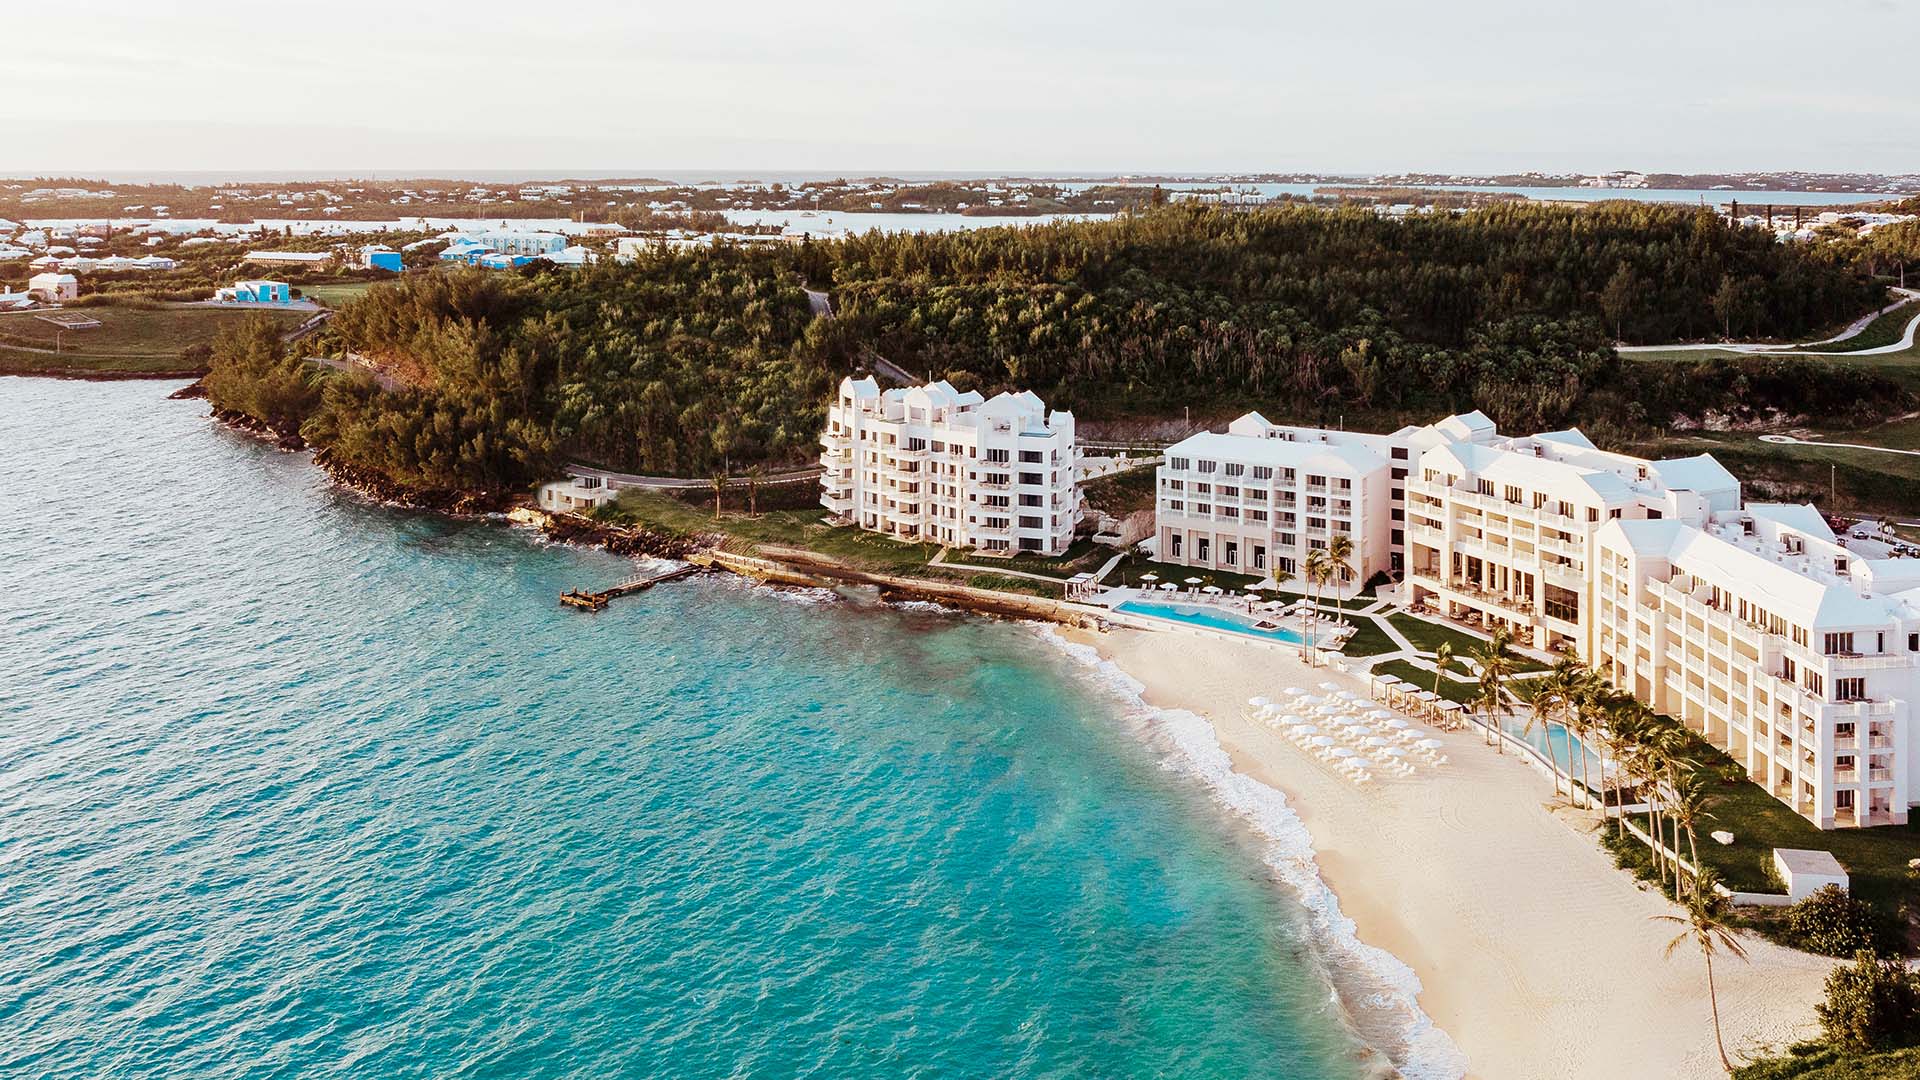 Aerial view of The St. Regis Bermuda Resort